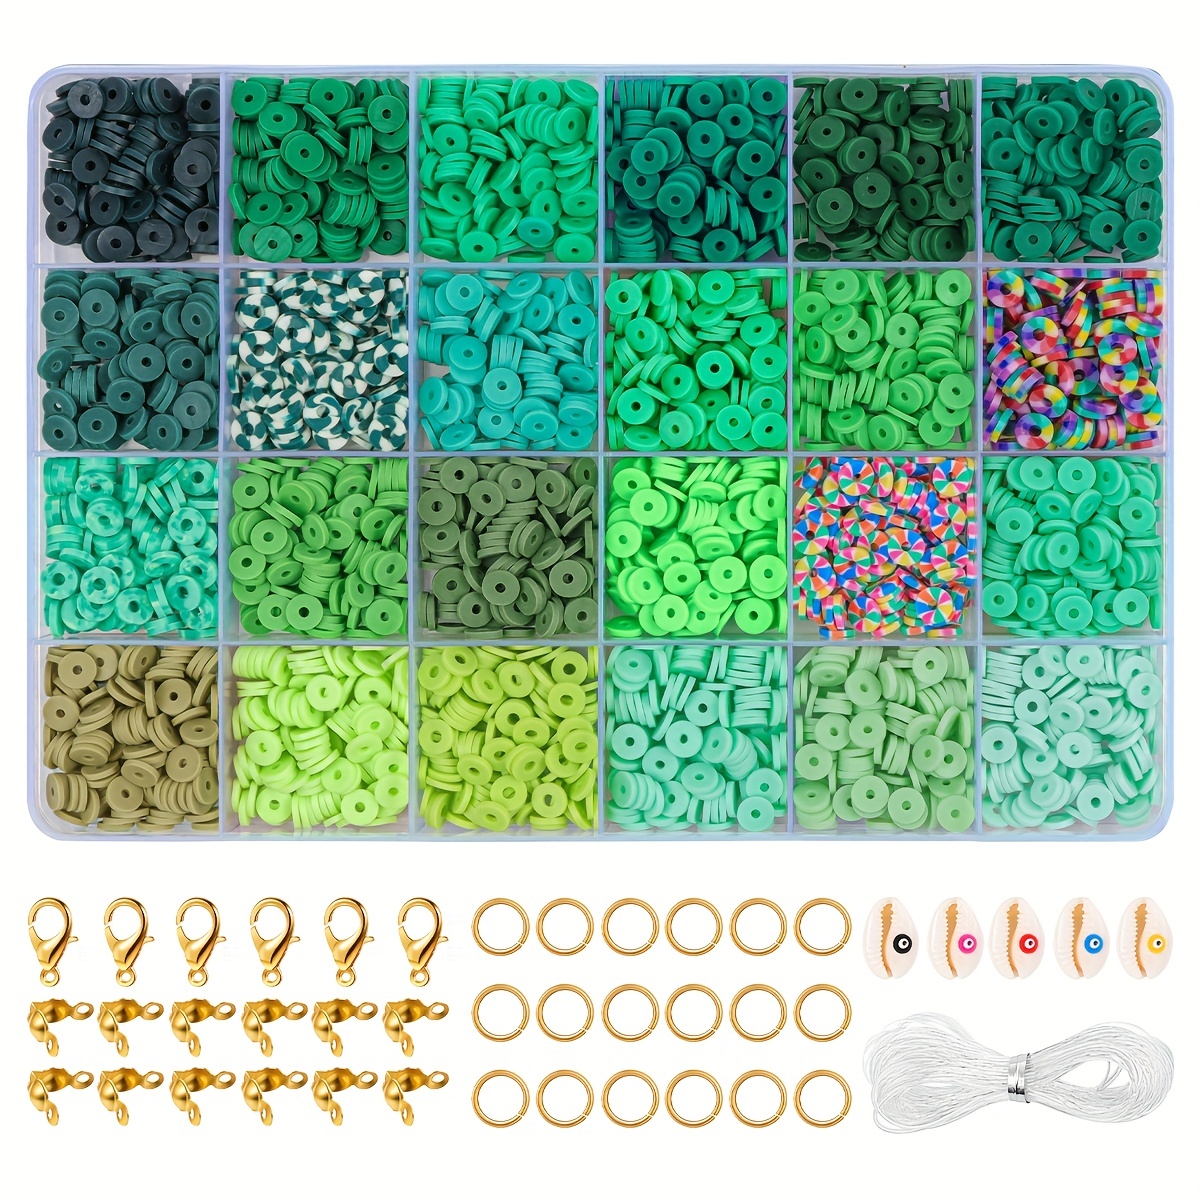 Bracelet Making Kit 24 Colors Bracelet Making Clay Beads Smile